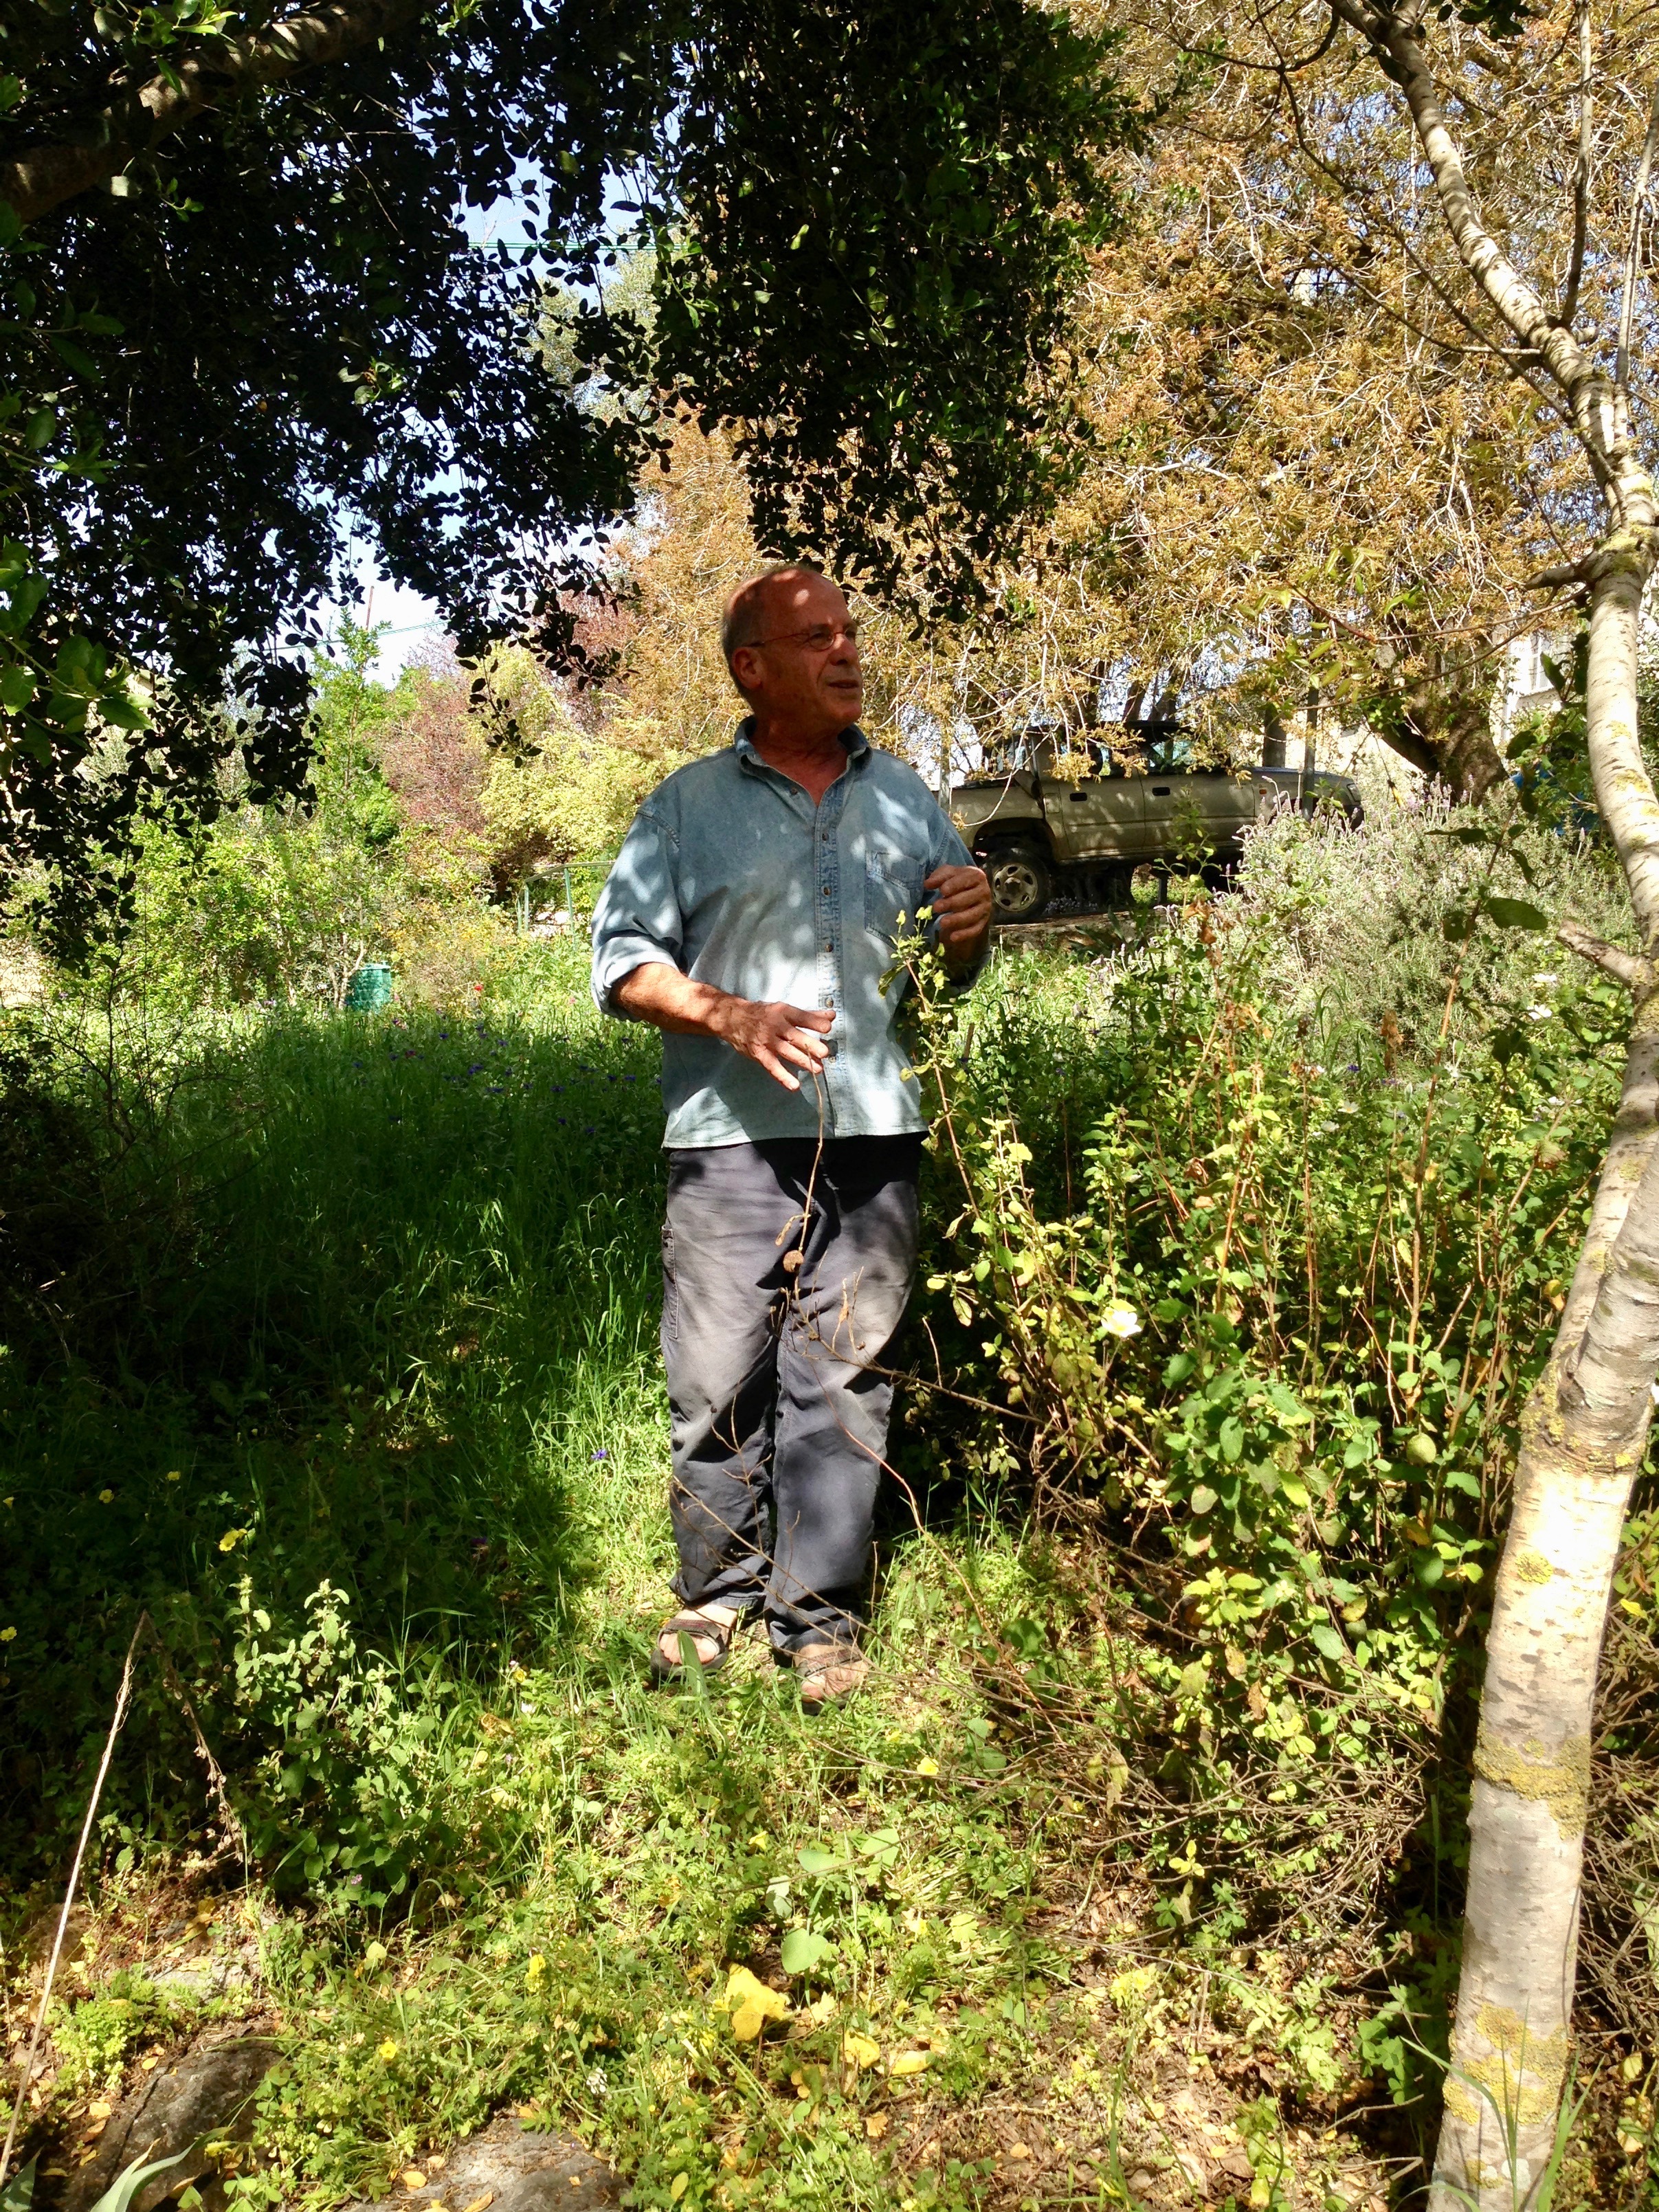  Israeli author Meir Shalev in his garden 